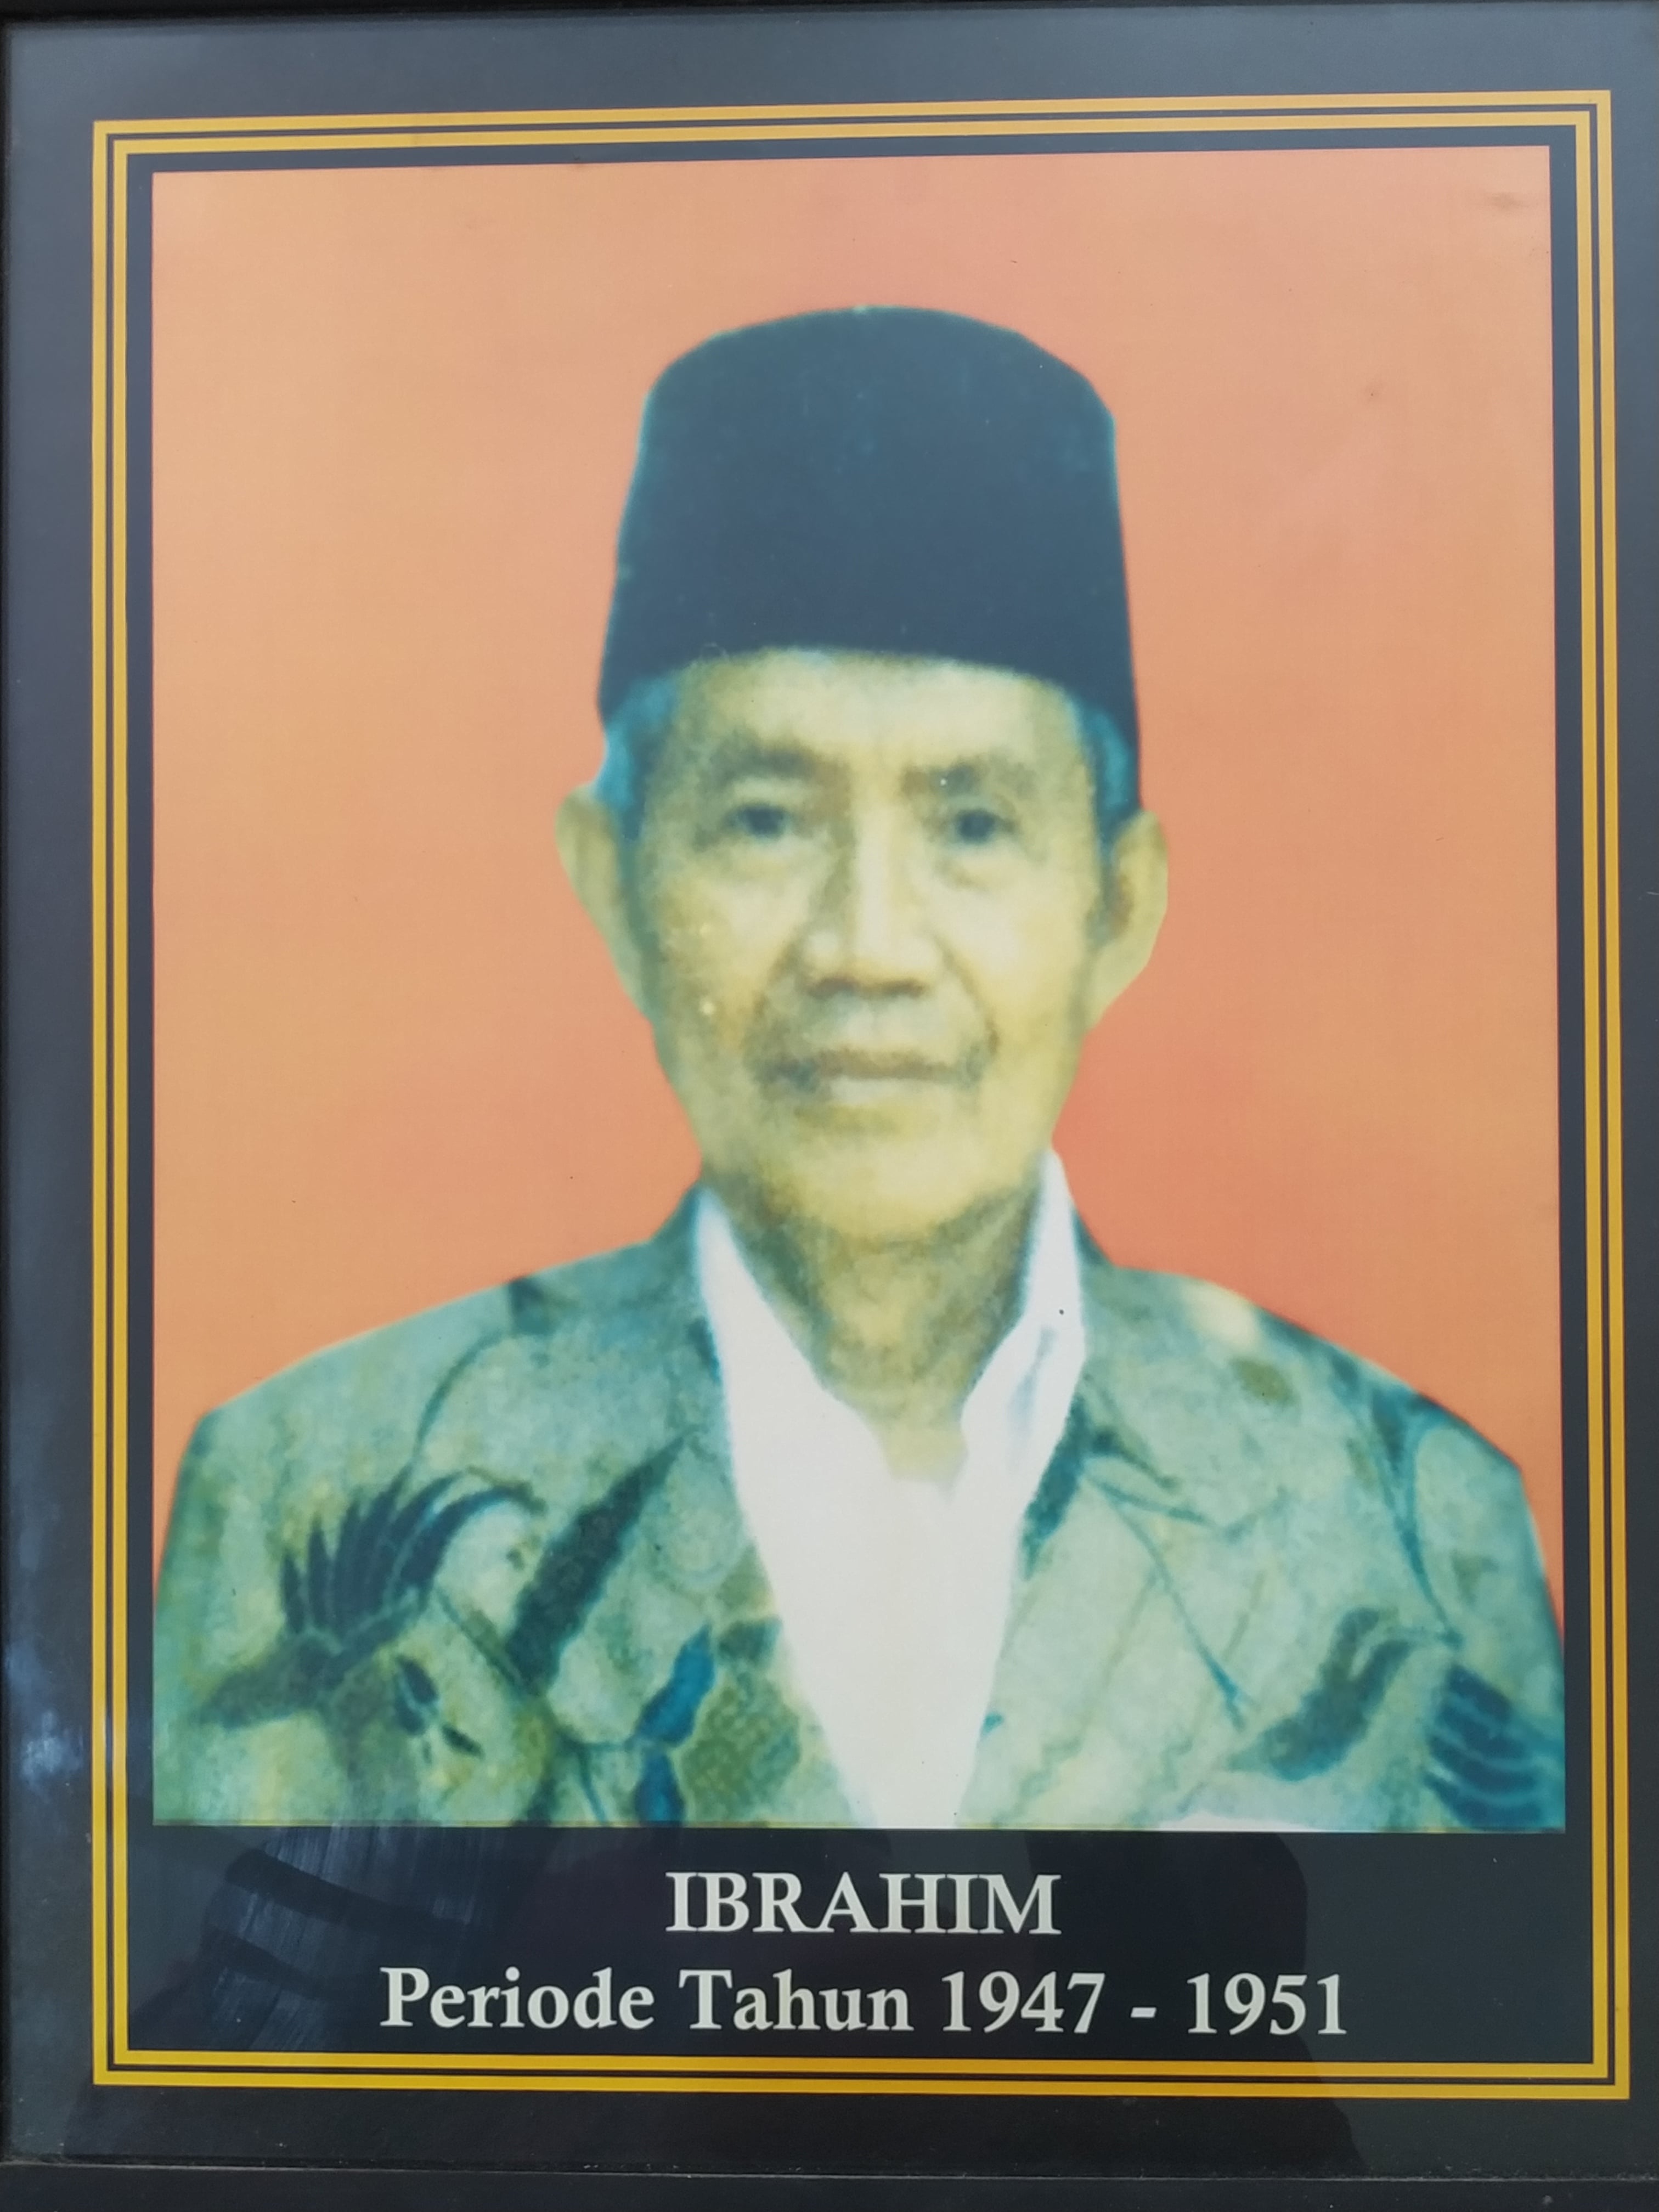 Mantan Ketua 1947 1951 Ibrahim